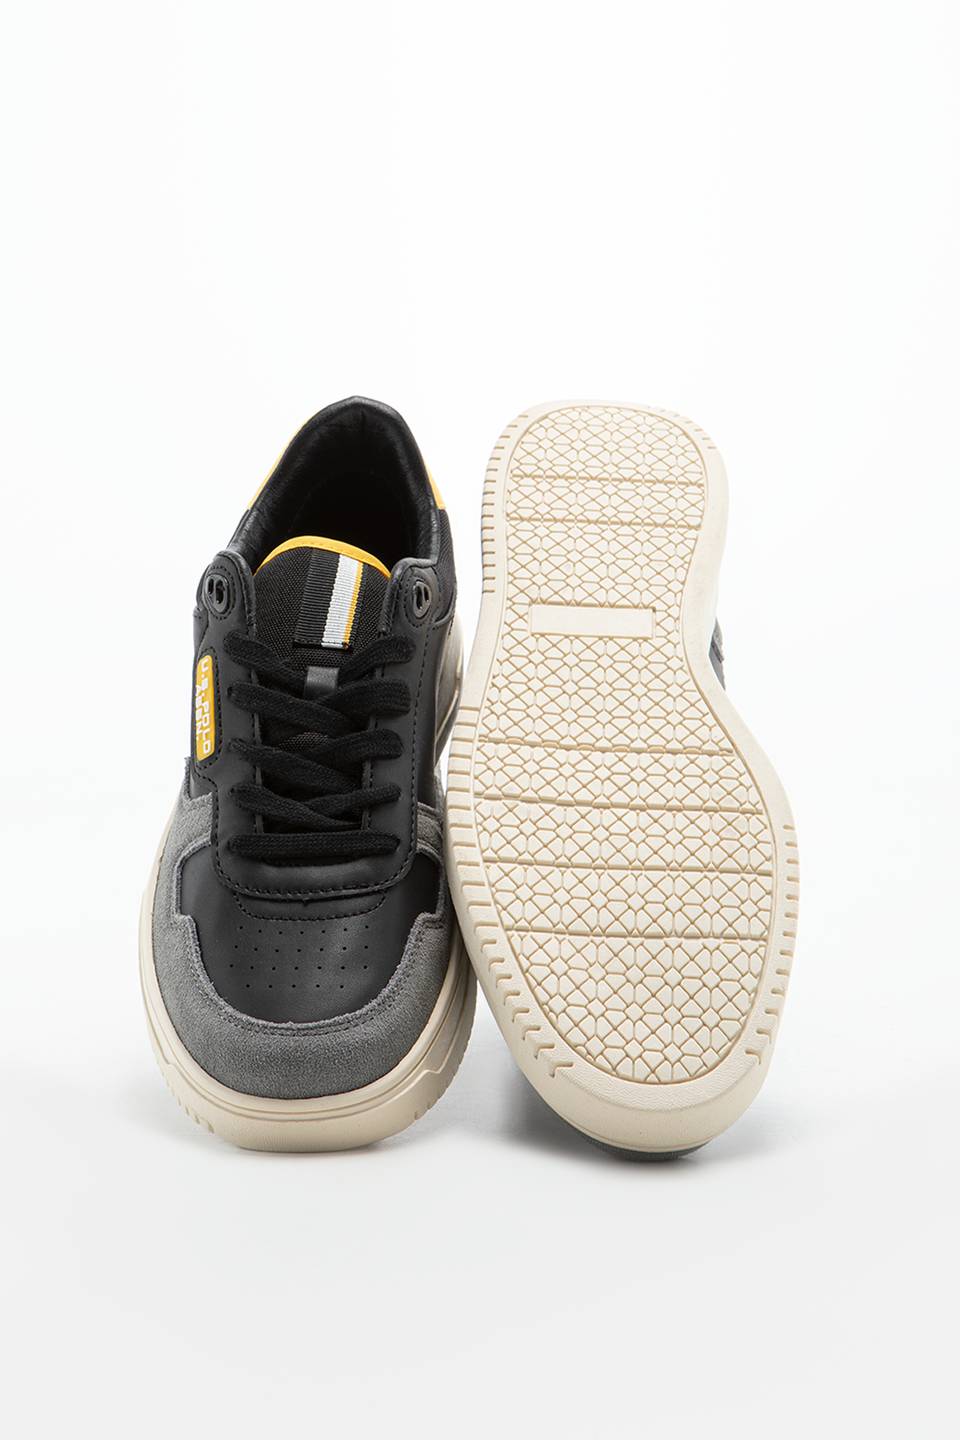 Sneakers U.S. Polo RUSH001BBLK-DGR03